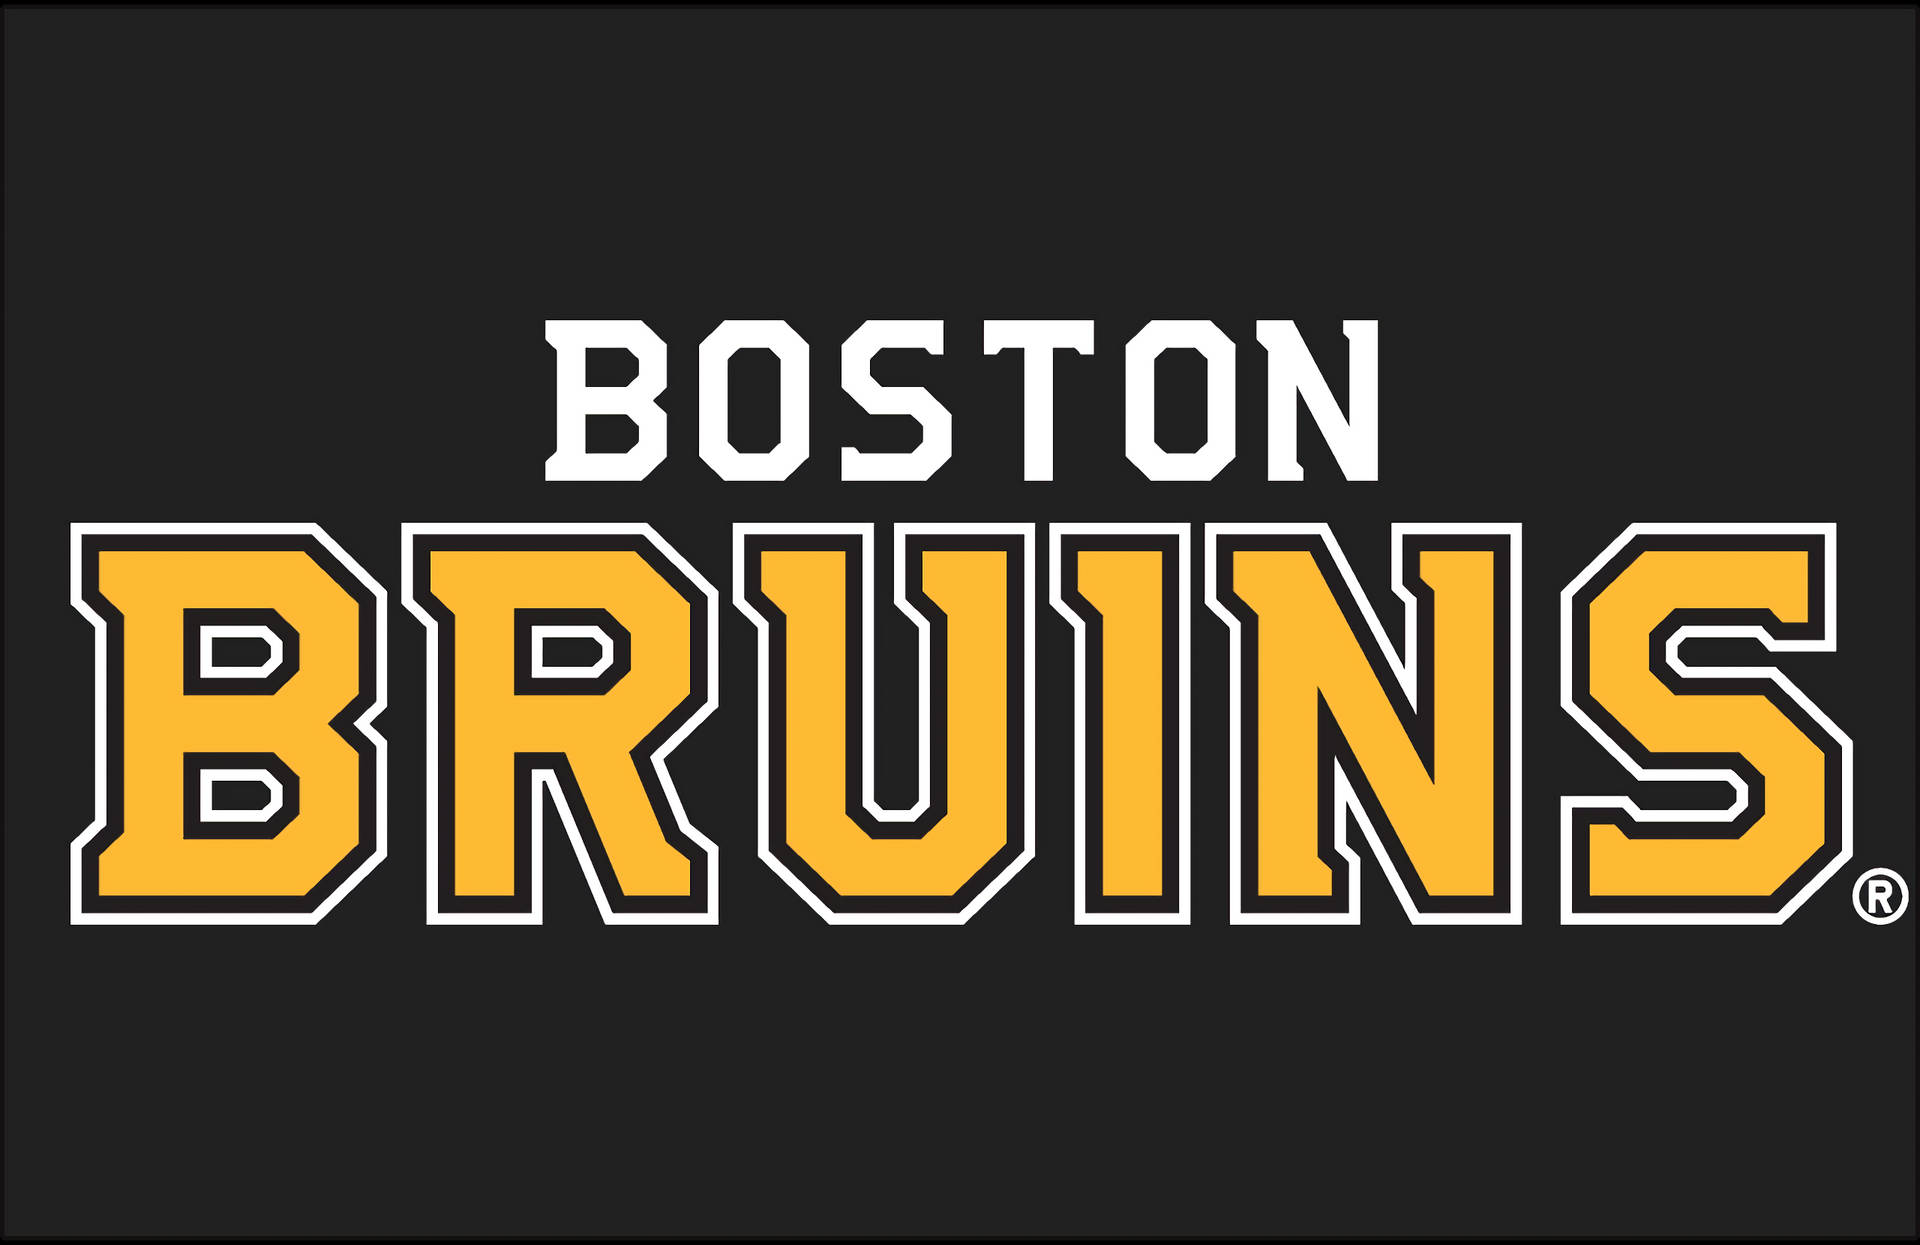 Boston Bruins Text Wallpaper